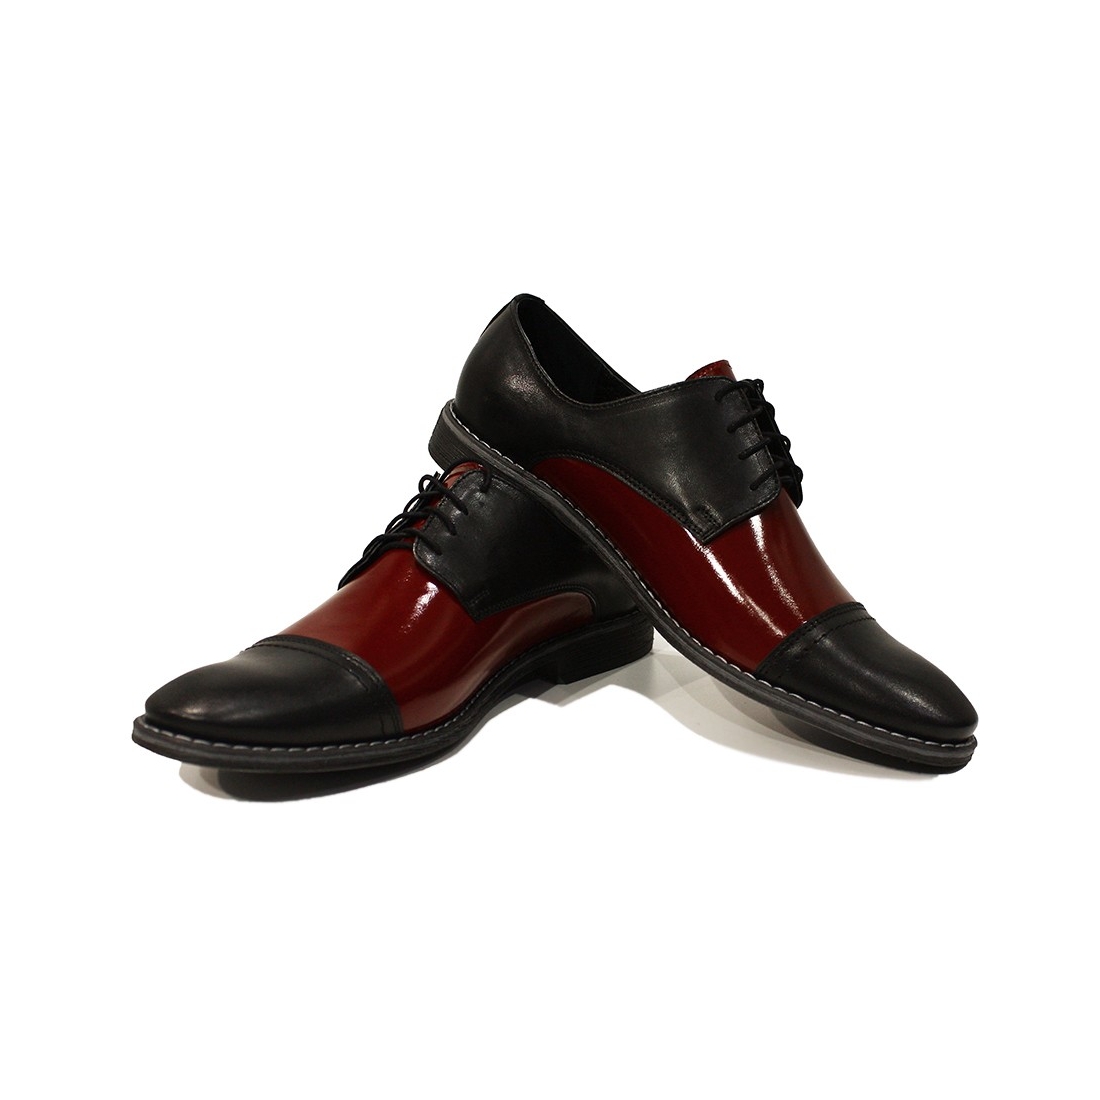 Handmade Italian Leather Shoes - PeppeShoes